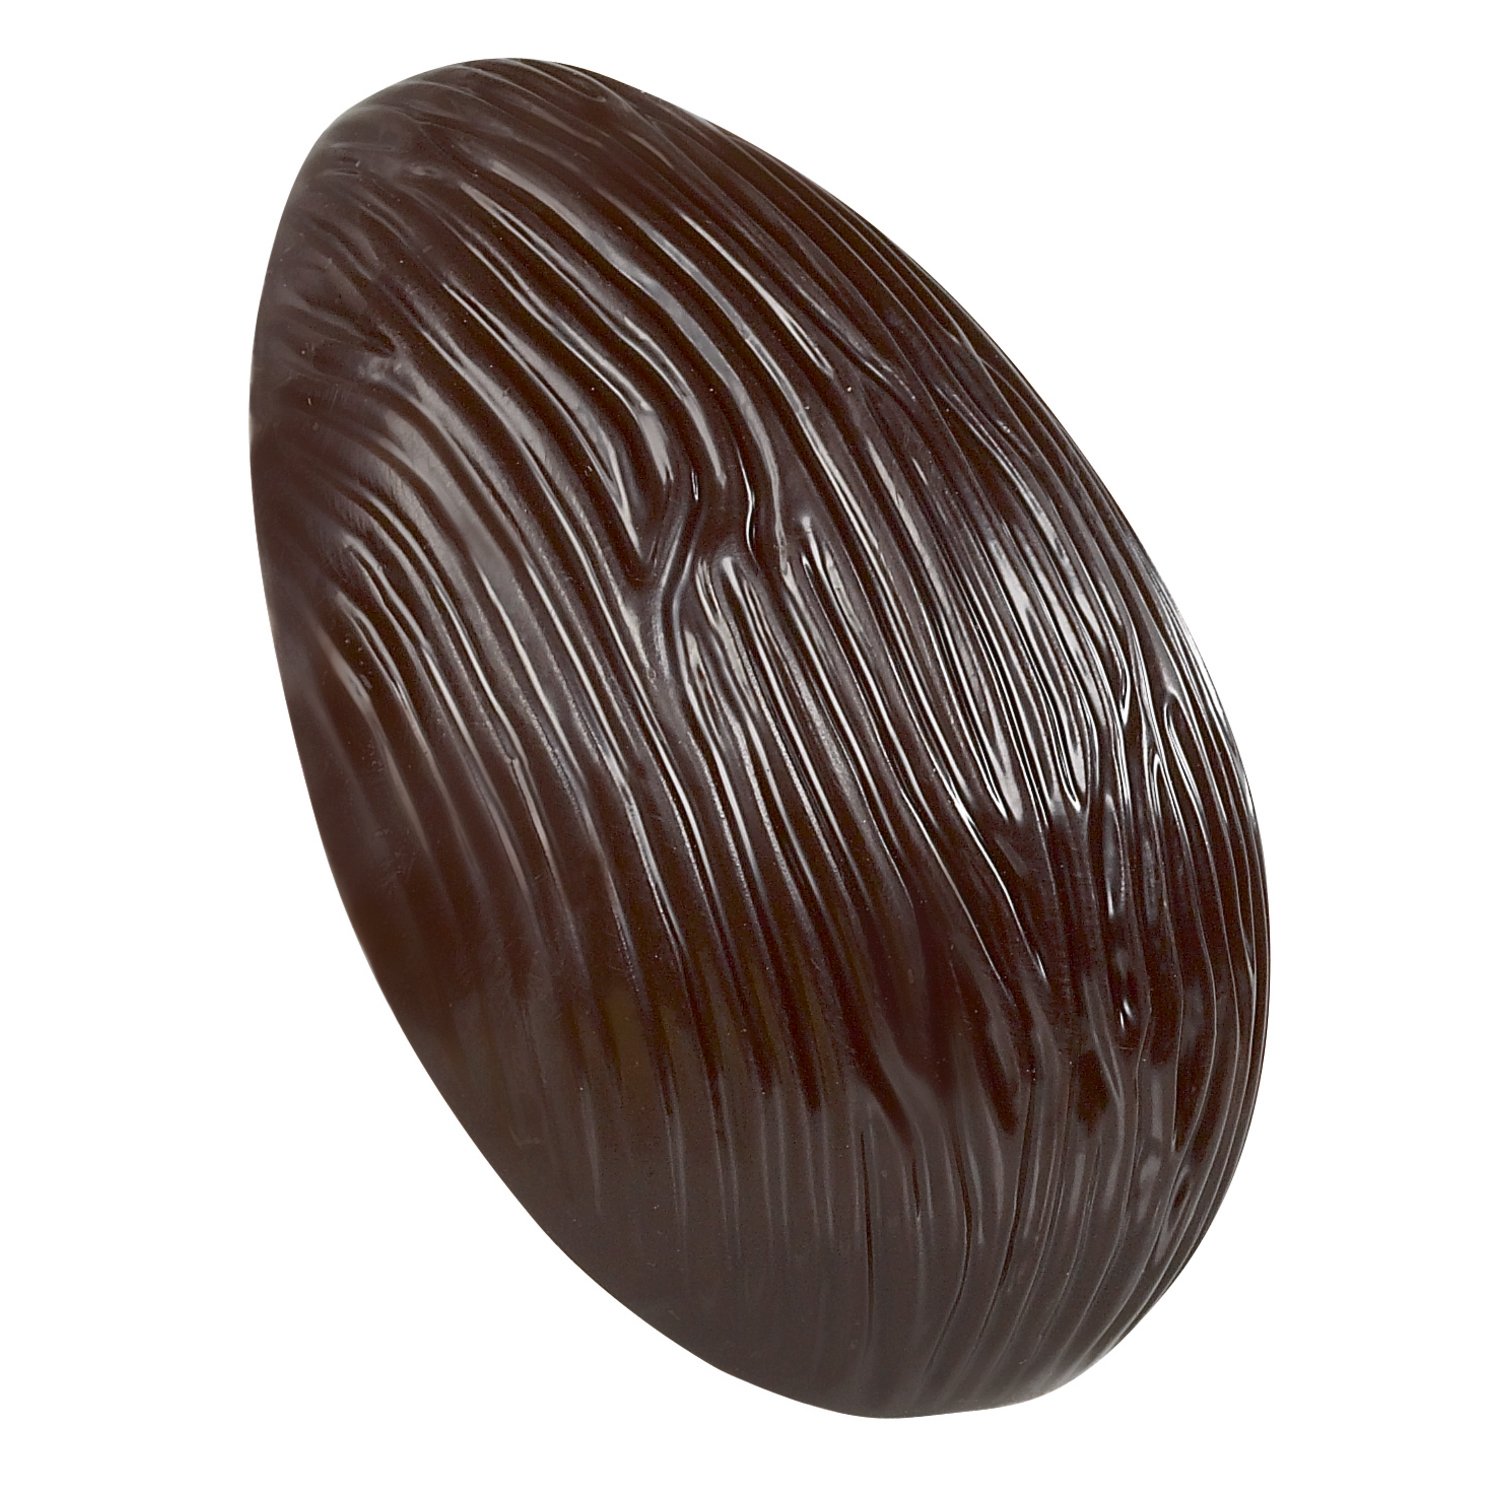 15cm bark half egg shells - dark - 12x95g